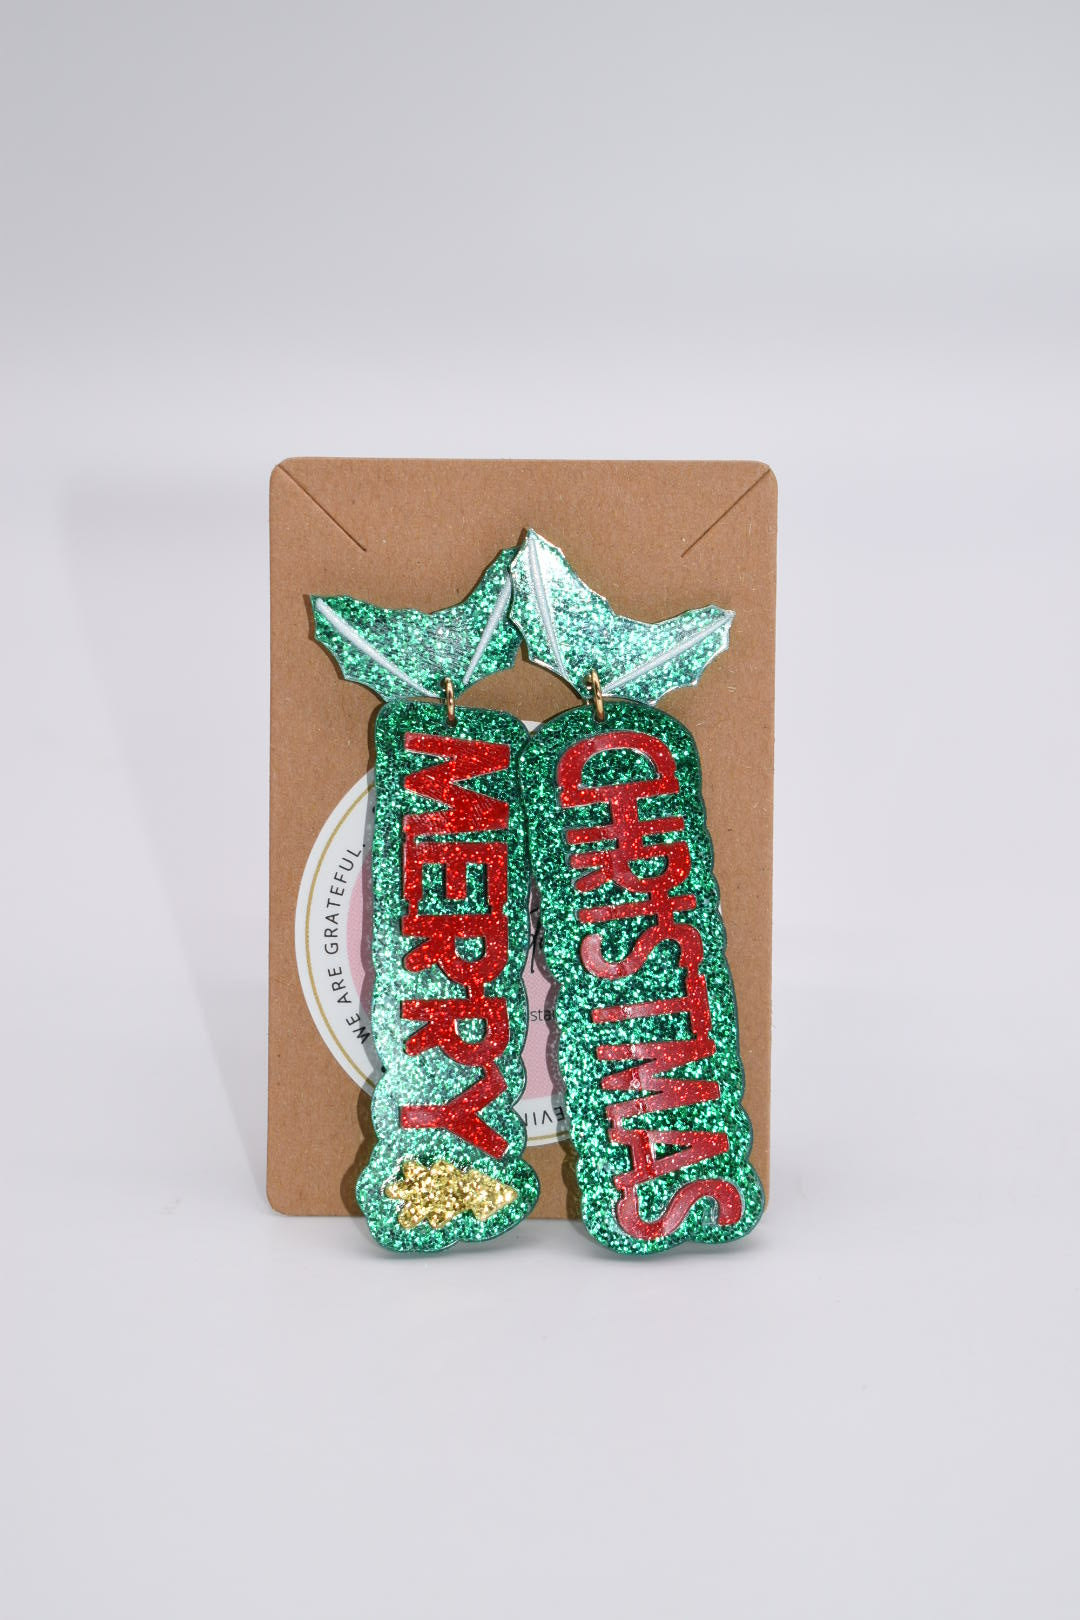 Seasonal Earrings: "Merry Mistletoe Christmas" Earrings